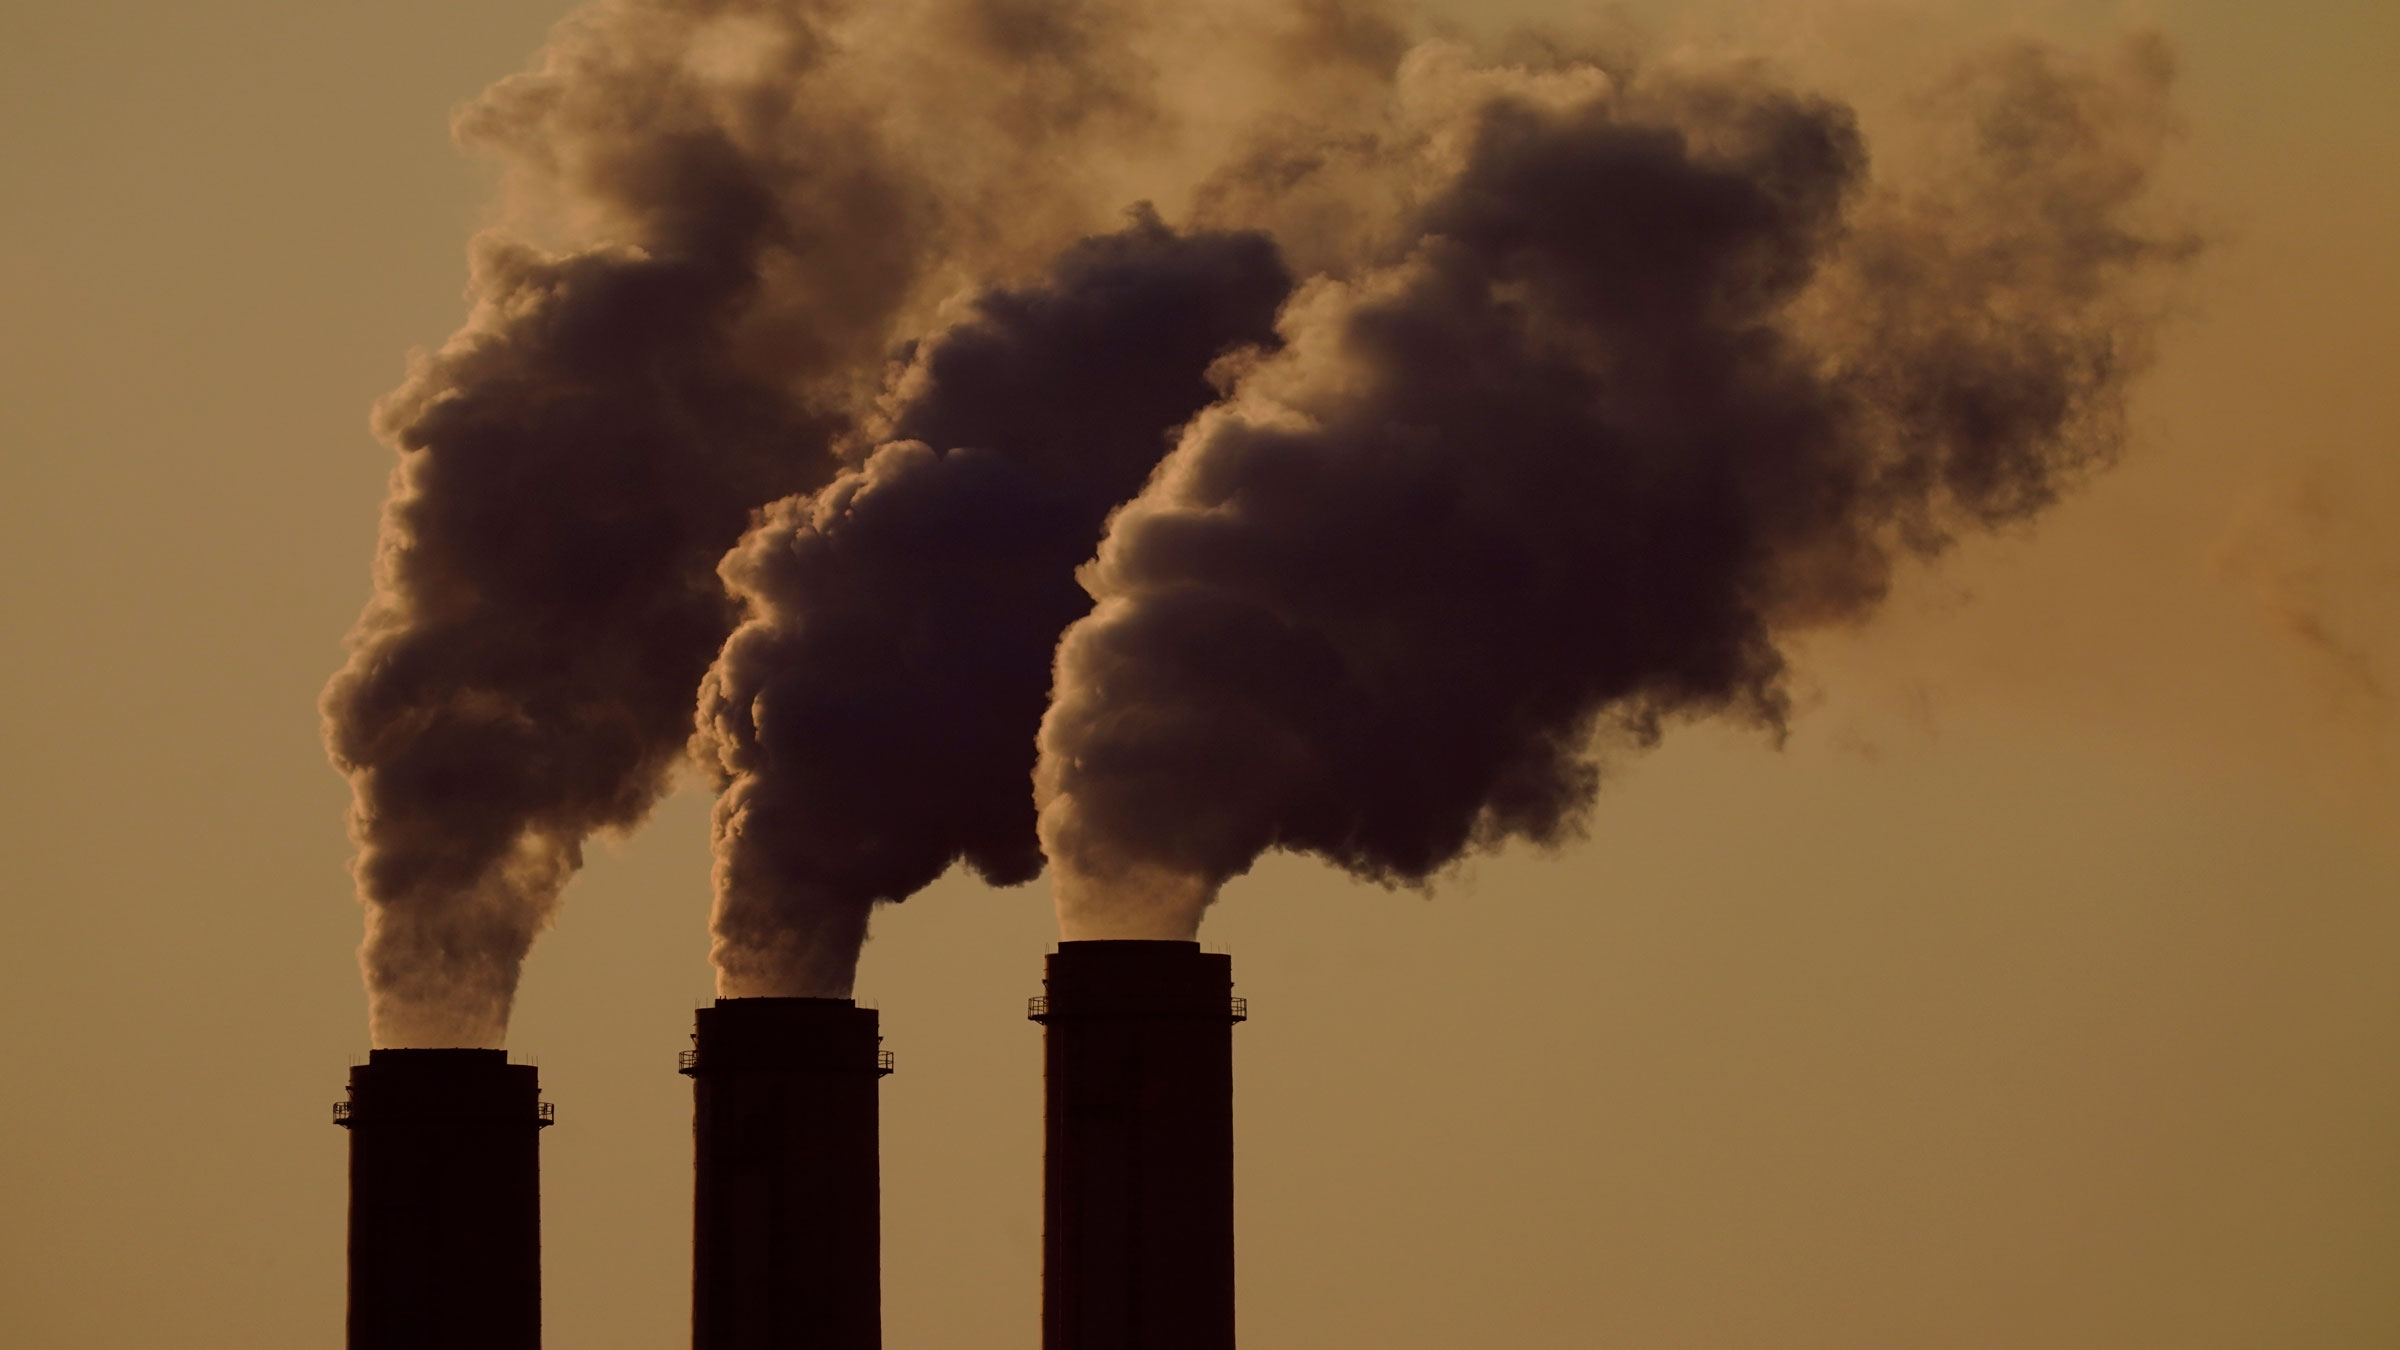 Emissions rise from the smokestacks at the Jeffrey Energy Center coal power plant near Emmett, Kansas, in September 2021.